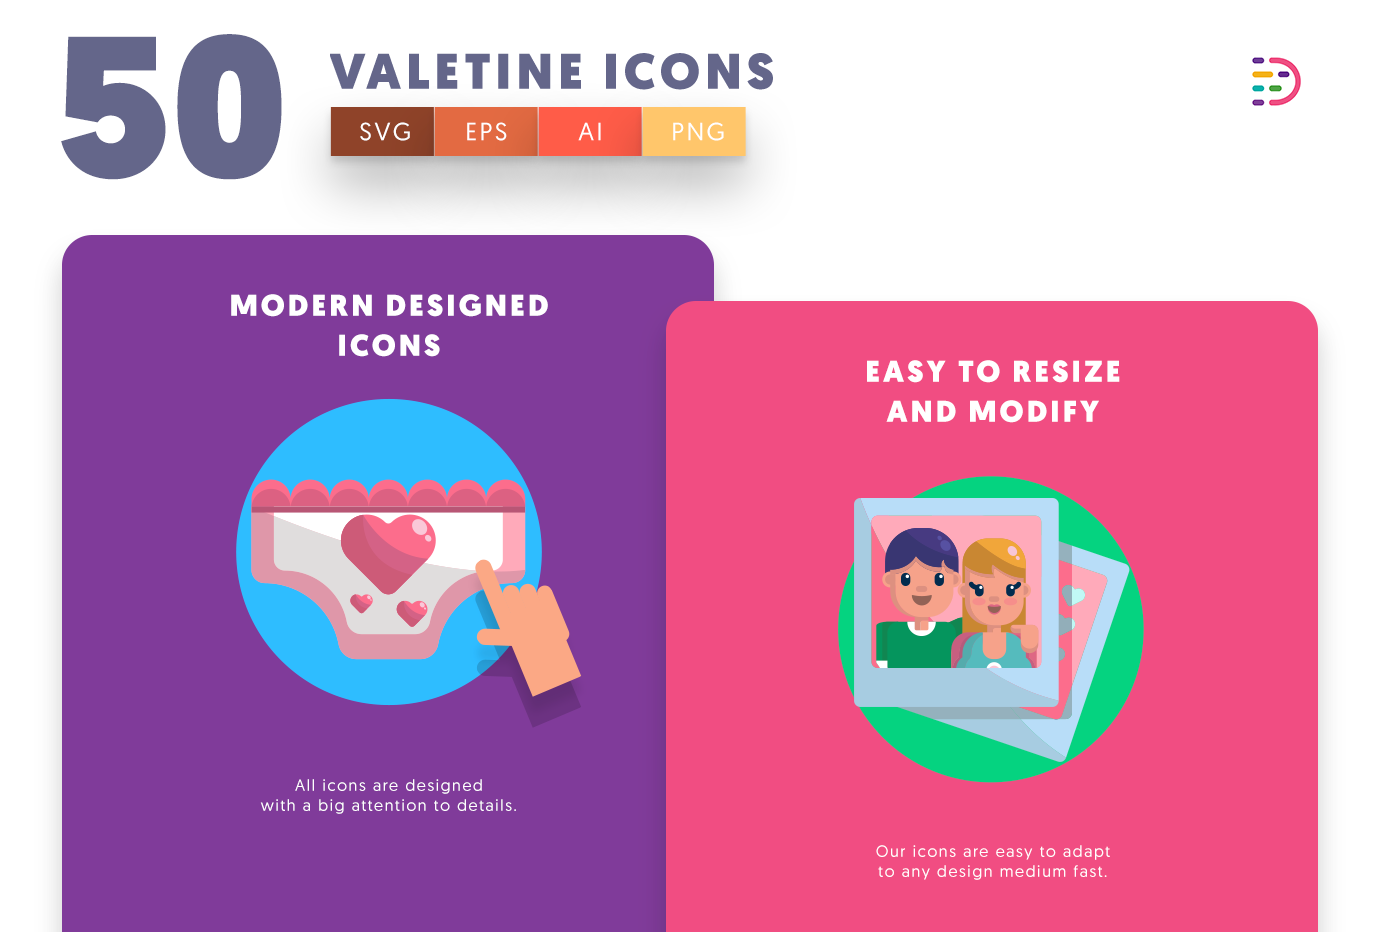 Design ready Valentines Icons